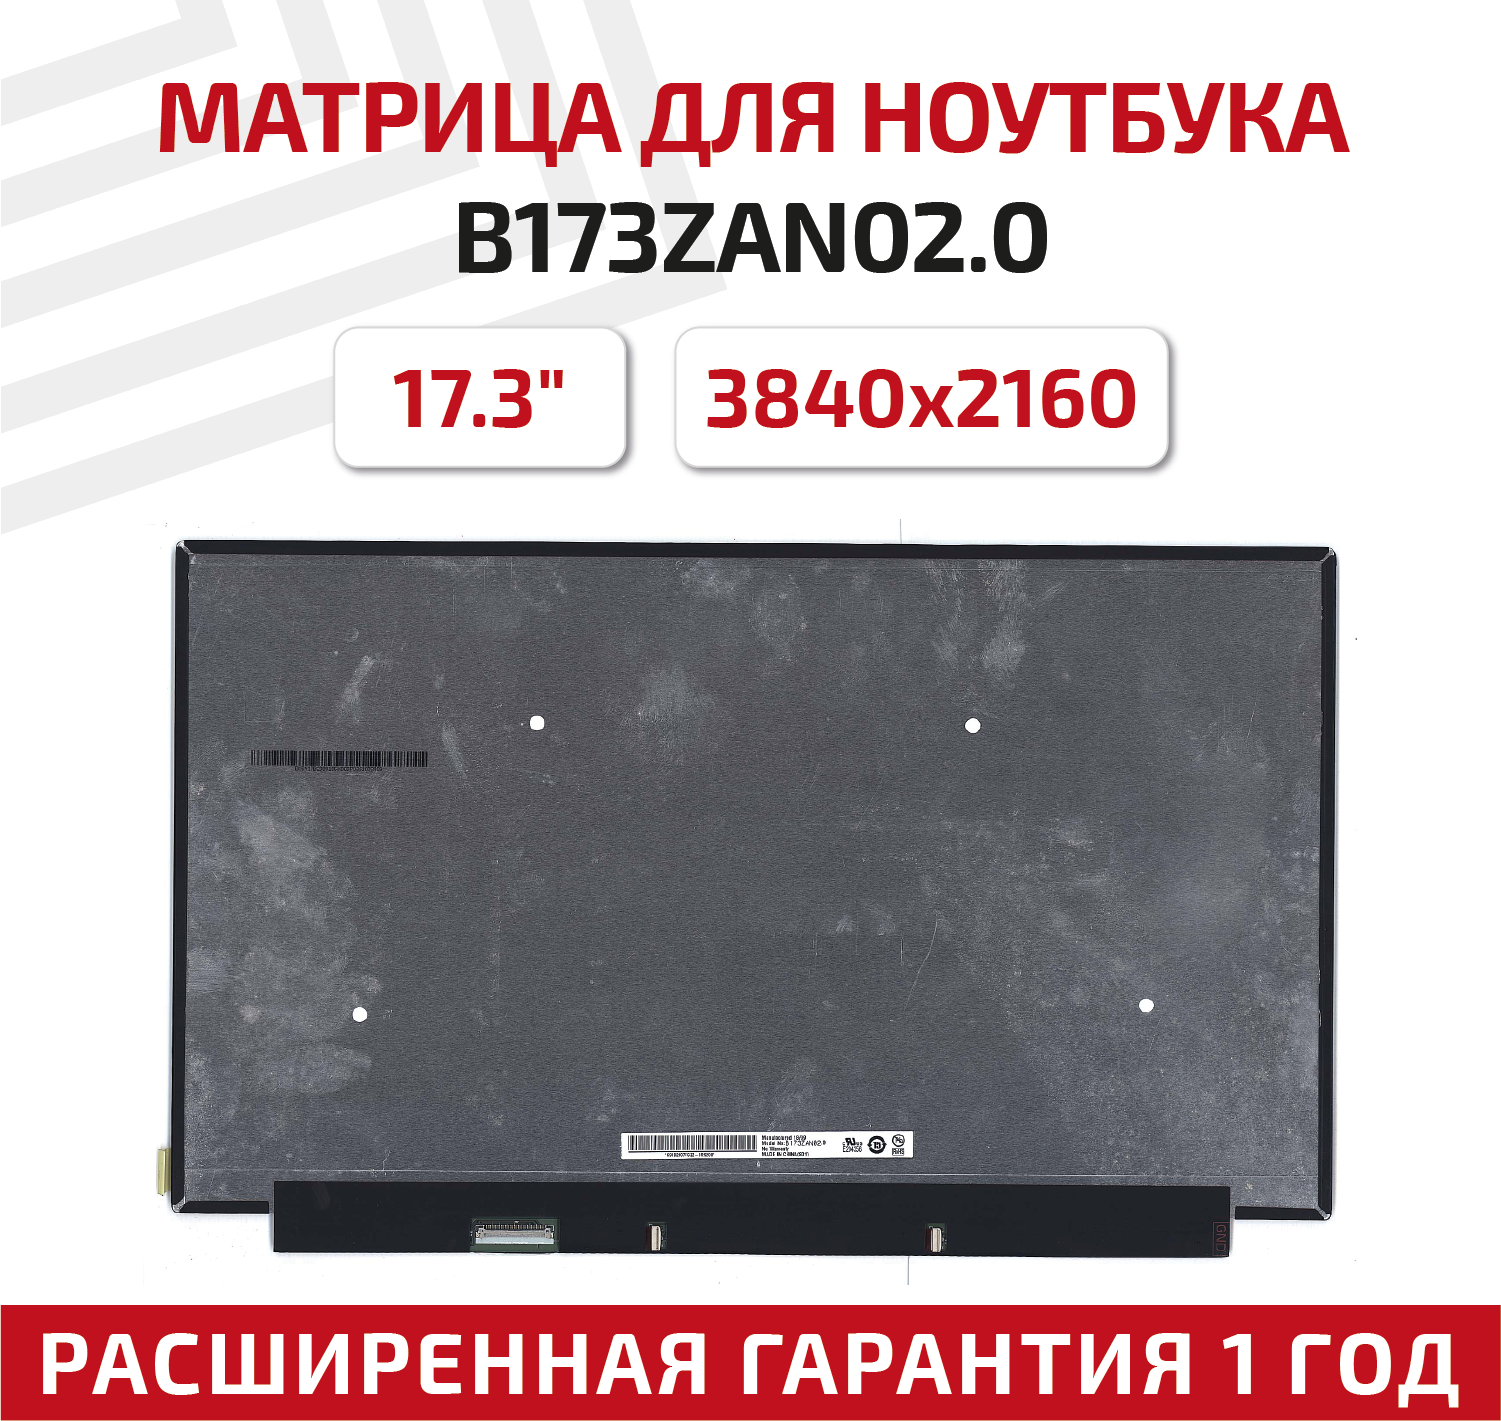 Матрица (экран) для ноутбука B173ZAN02.0, 17.3", 3840x2160, Slim (тонкая), 40-pin, светодиодная (LED), матовая